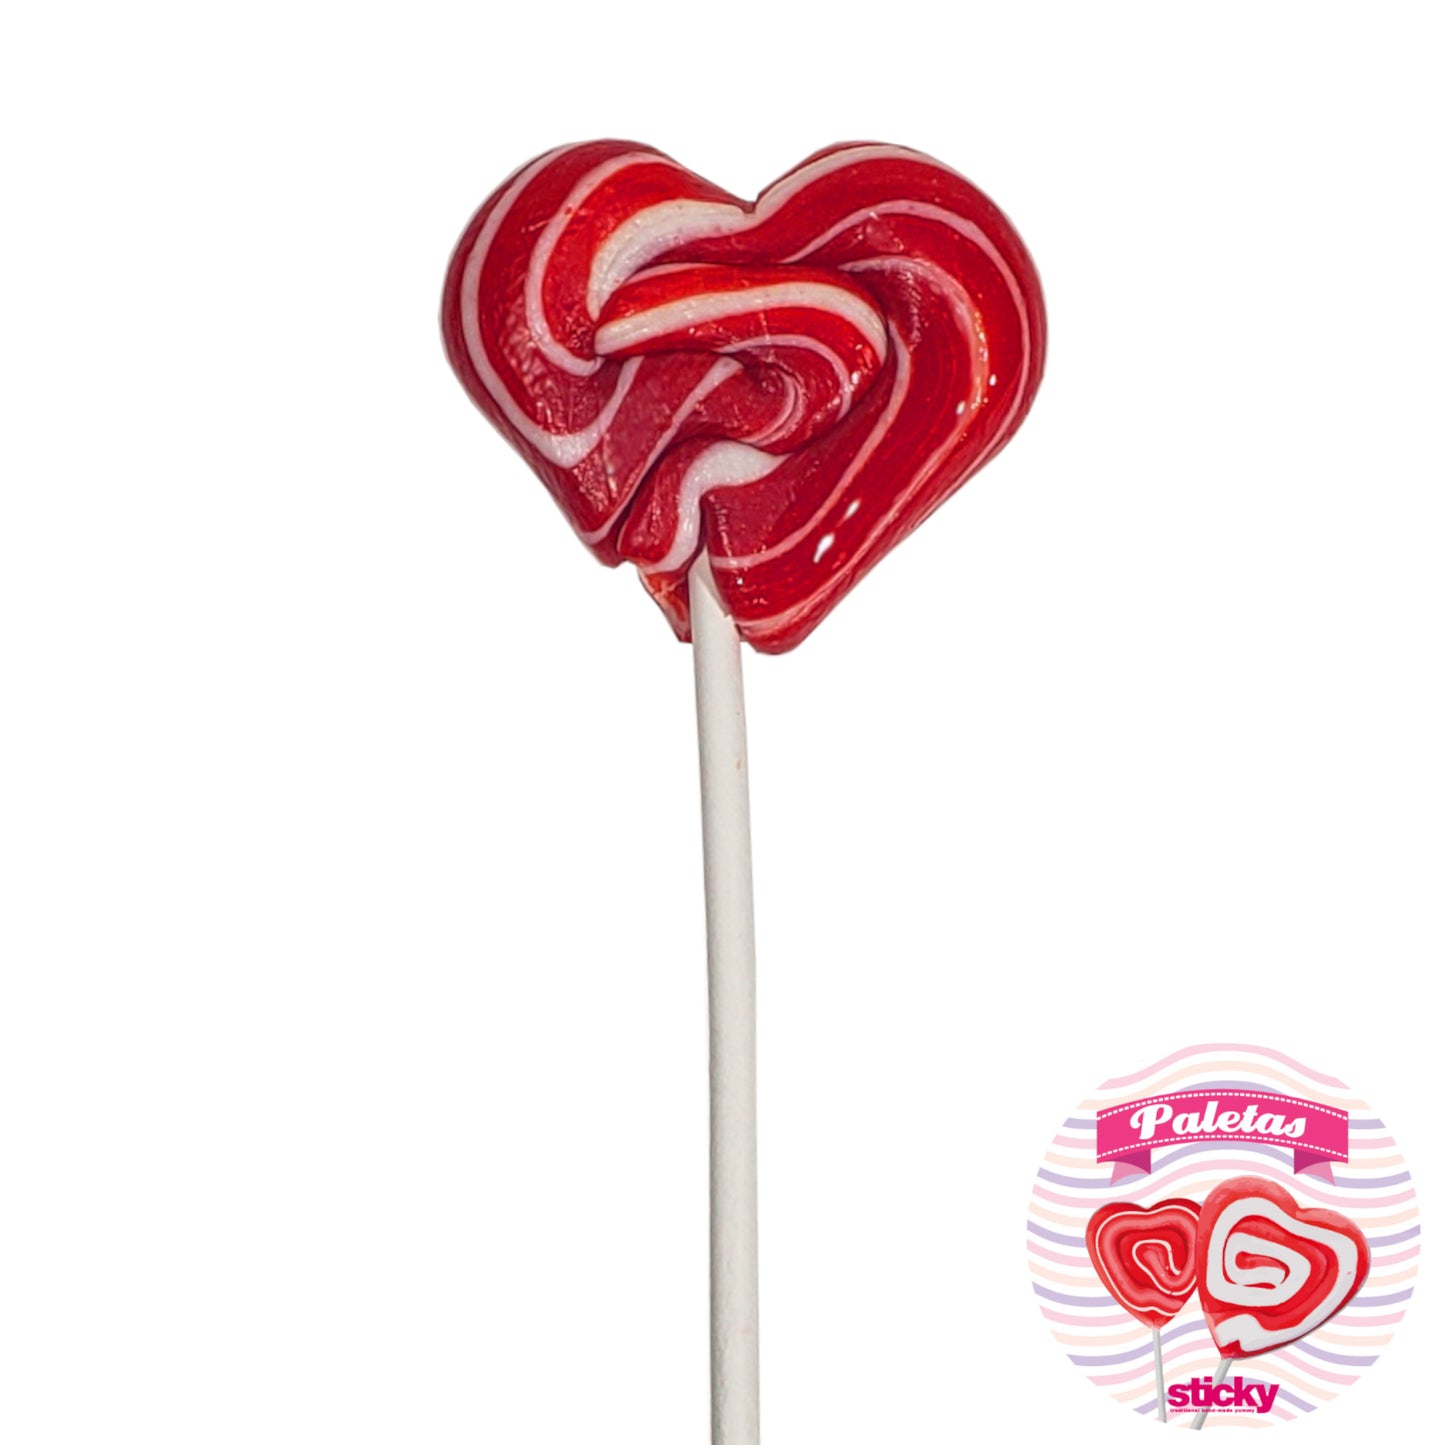 Paleta corazón sabor chicle con cereza 20g / heart lollipop